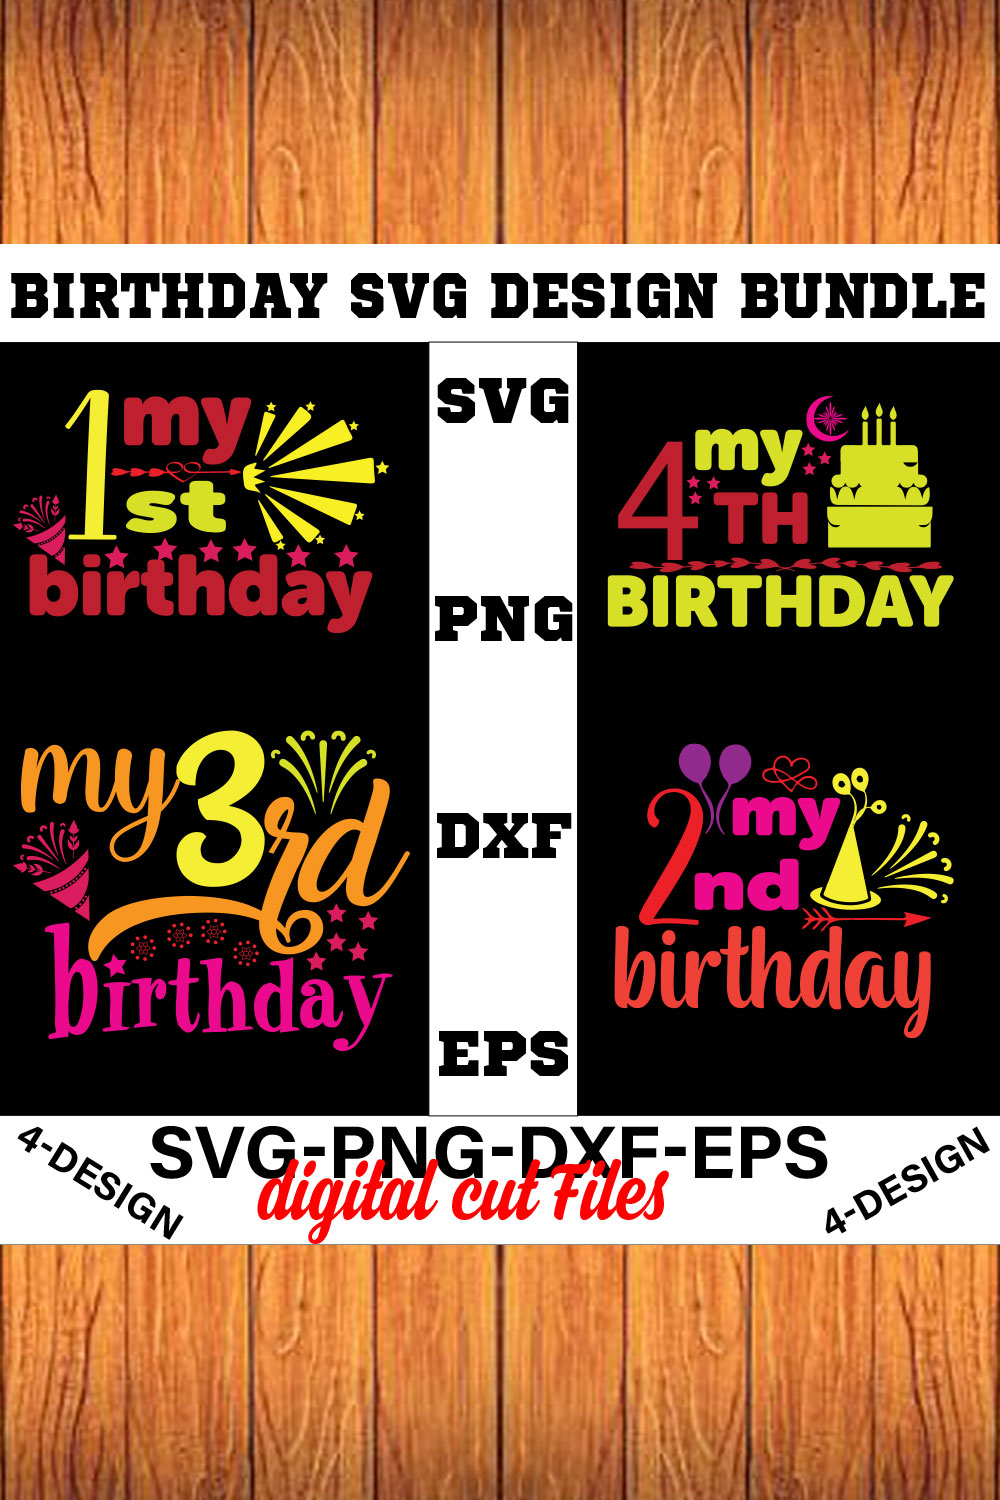 birthday svg design bundle Happy birthday svg bundle hand lettered birthday svg birthday party svg Volume-17 pinterest preview image.